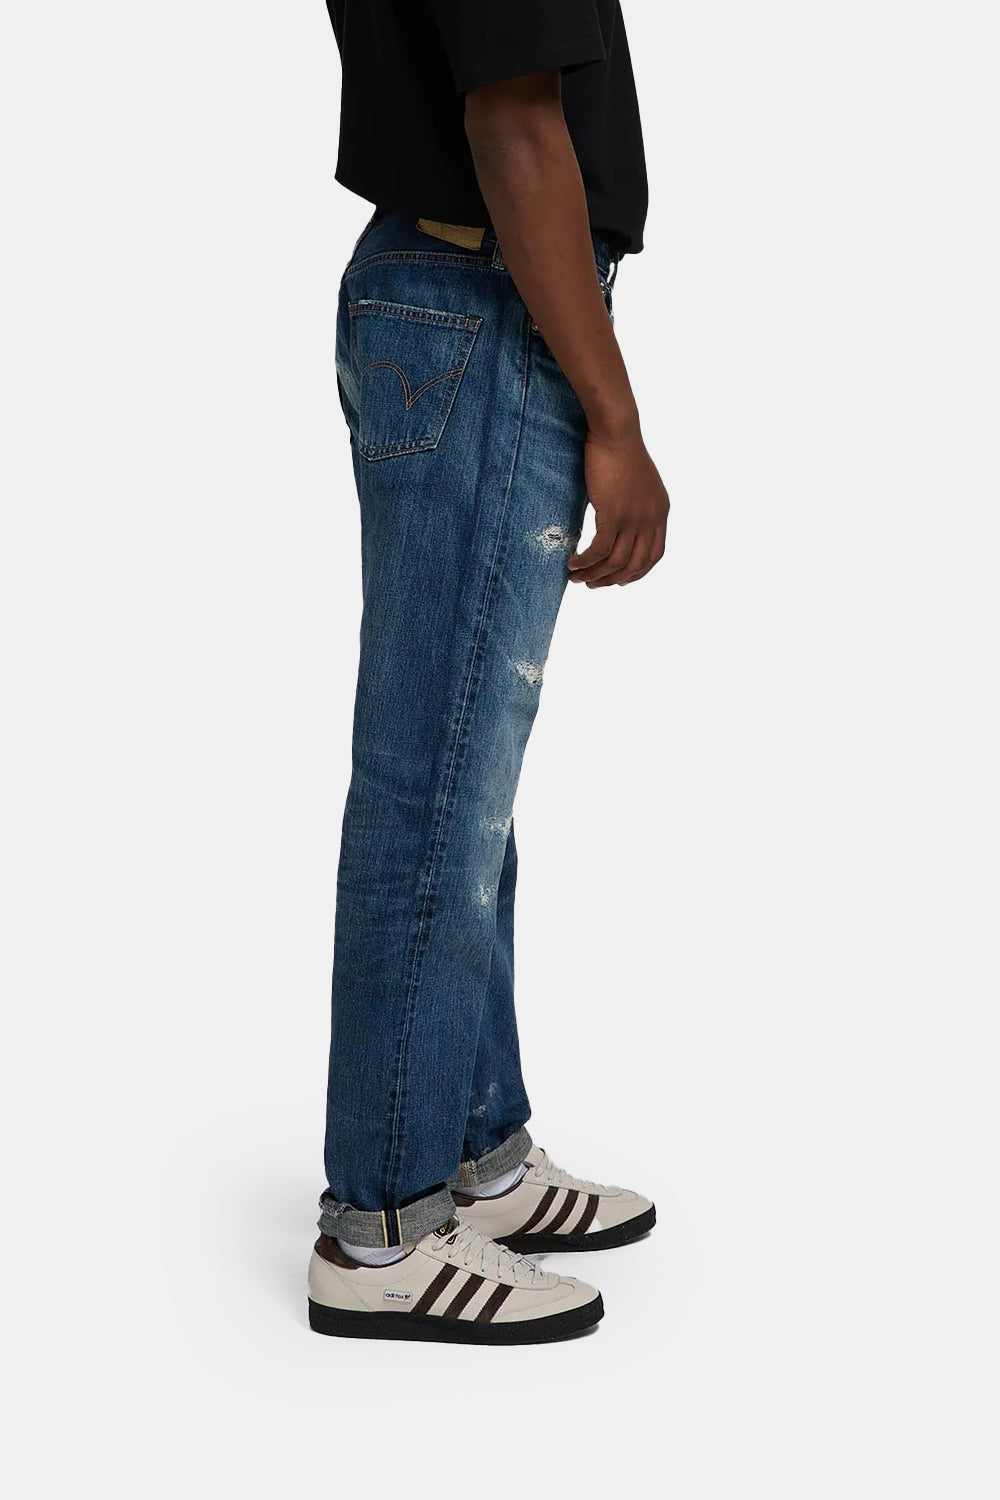 Edwin Regular Kaihara Tapered Rainbow Selvage Jeans (Dark Pure Indigo) | Number Six